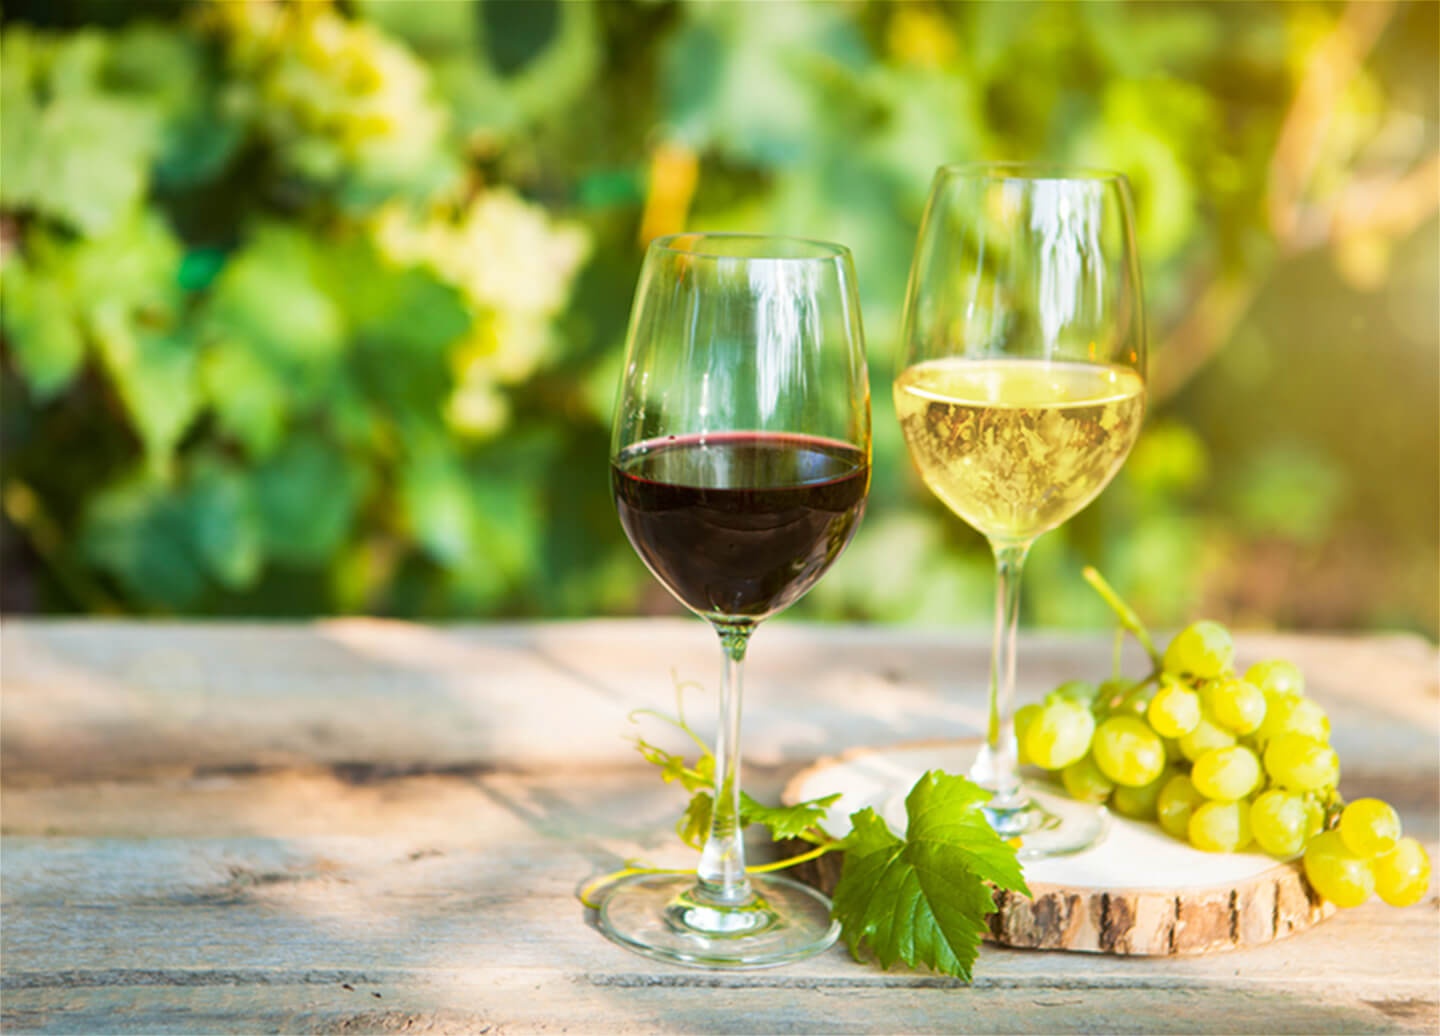 Winery image